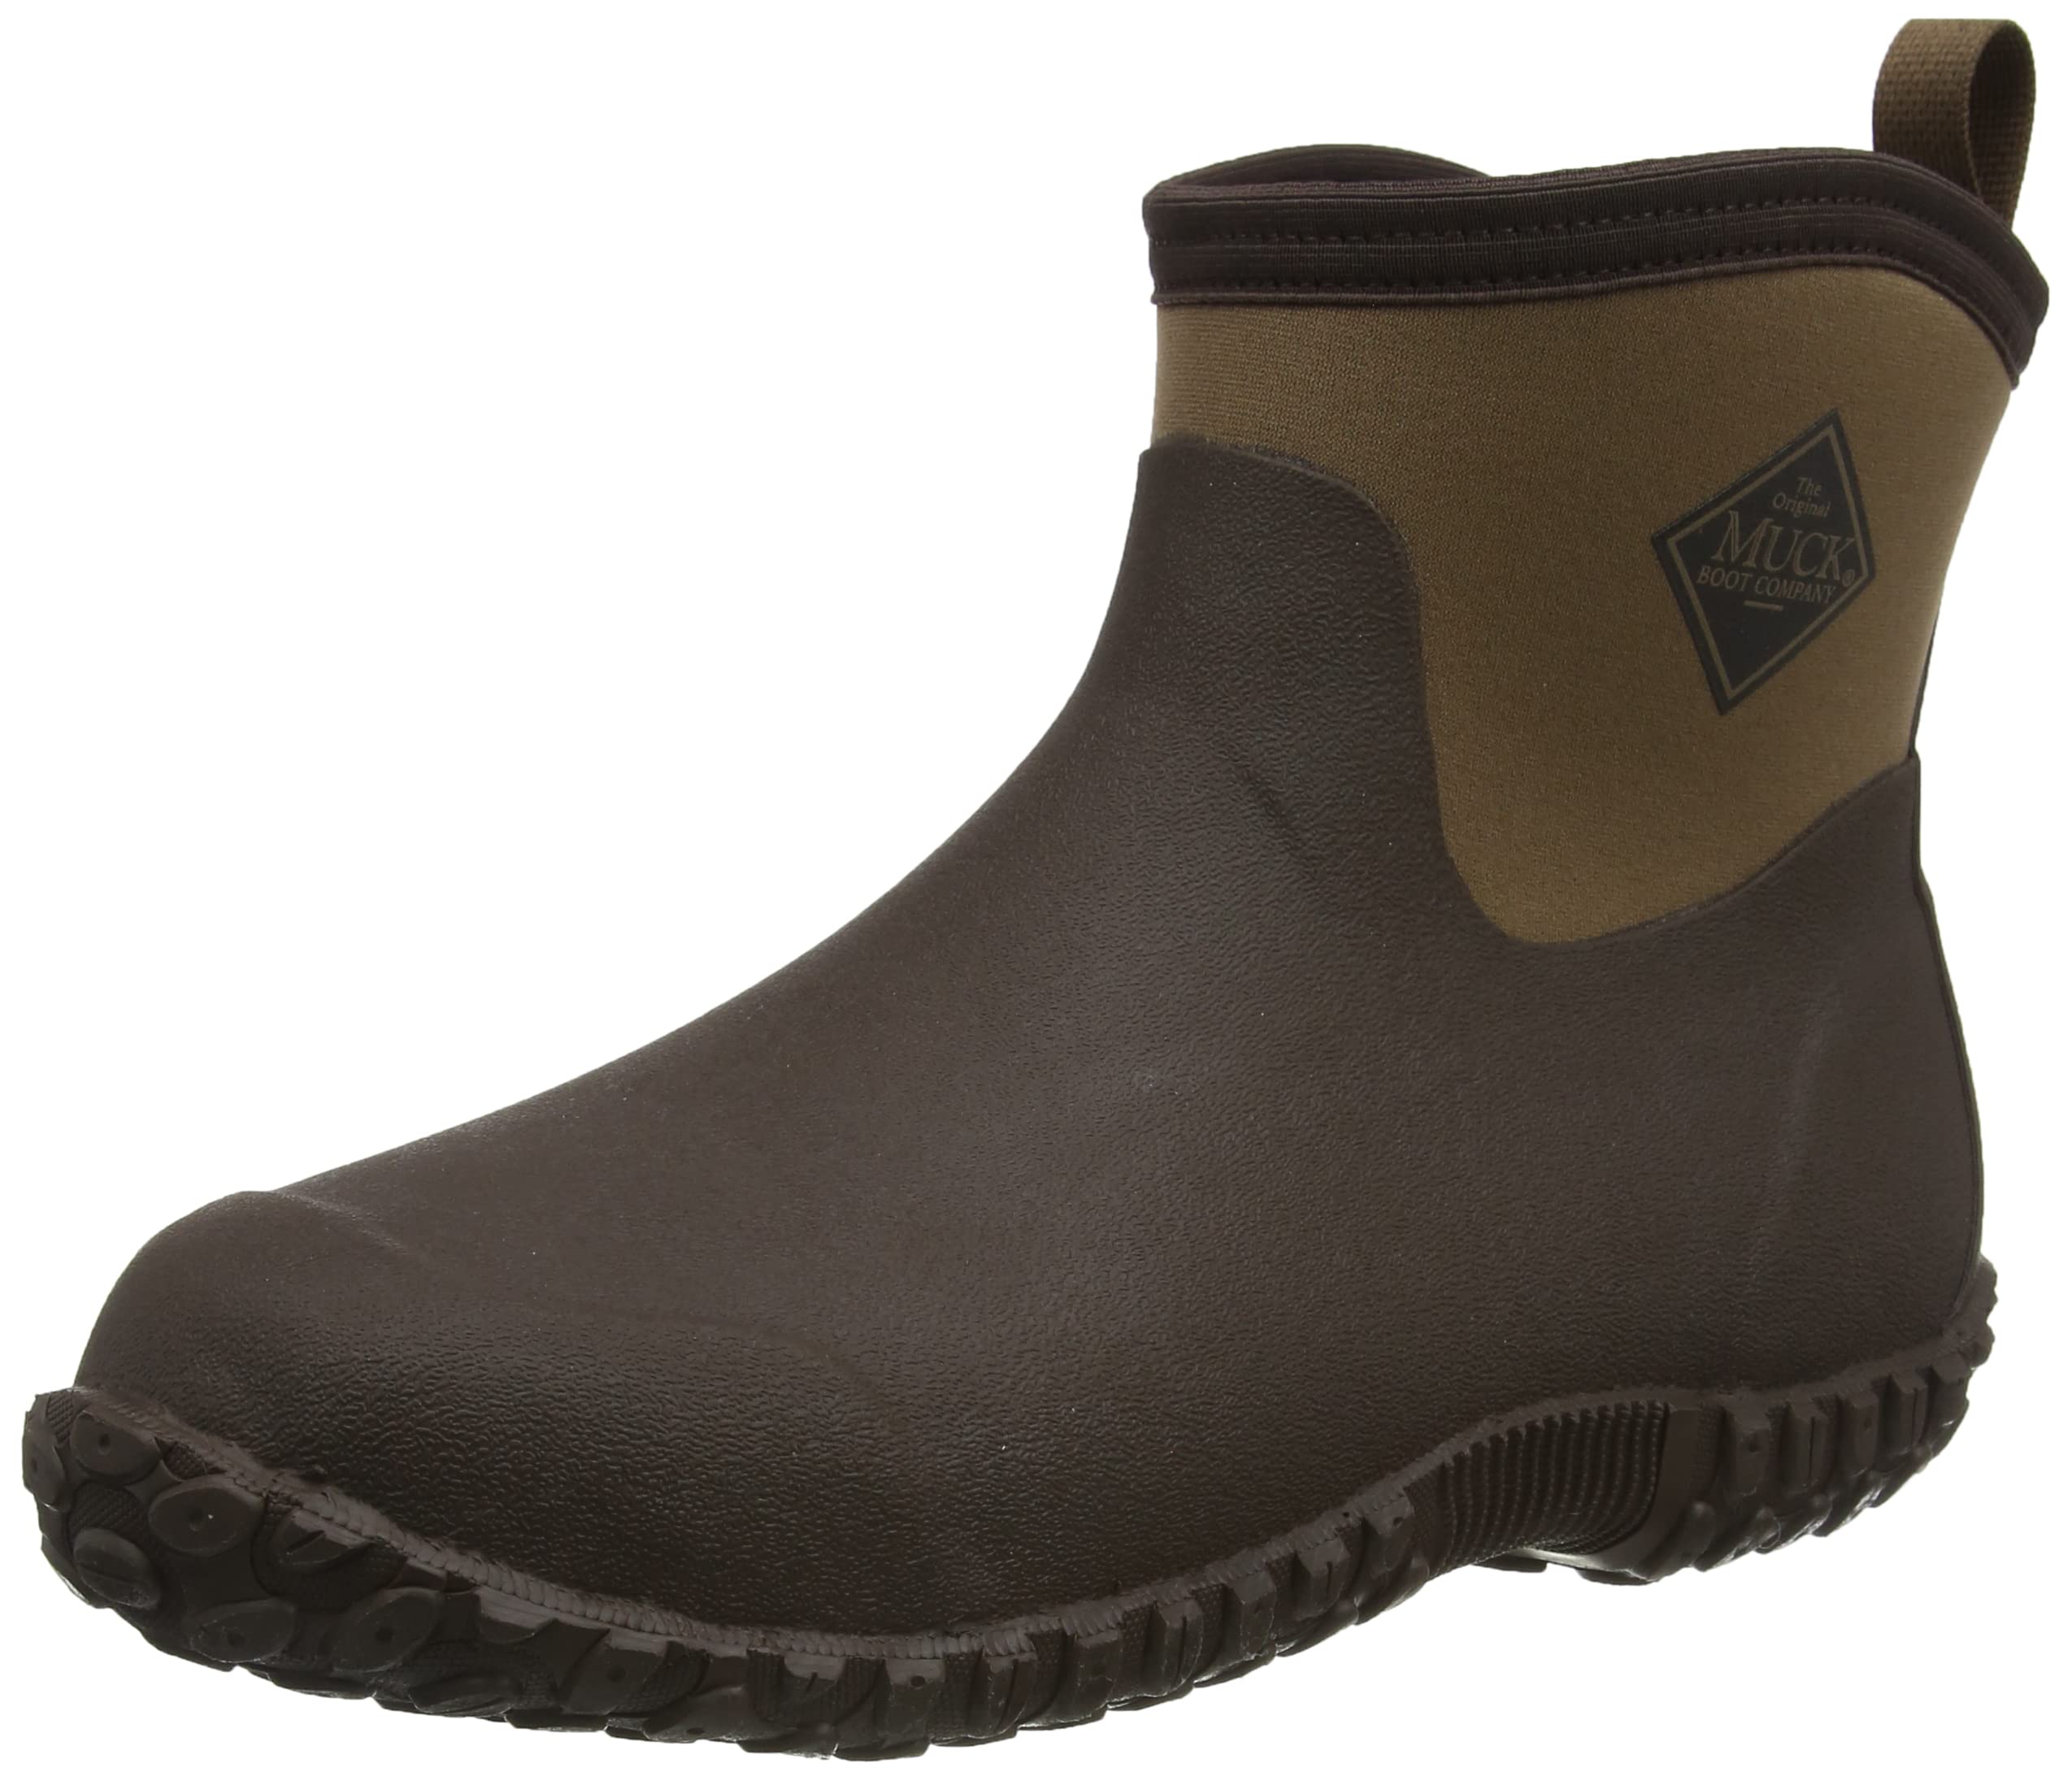 Muck Boot Women's Muckster 2 Ankle Waterproof Boots (Bark/Otter) $44 + Free Shipping